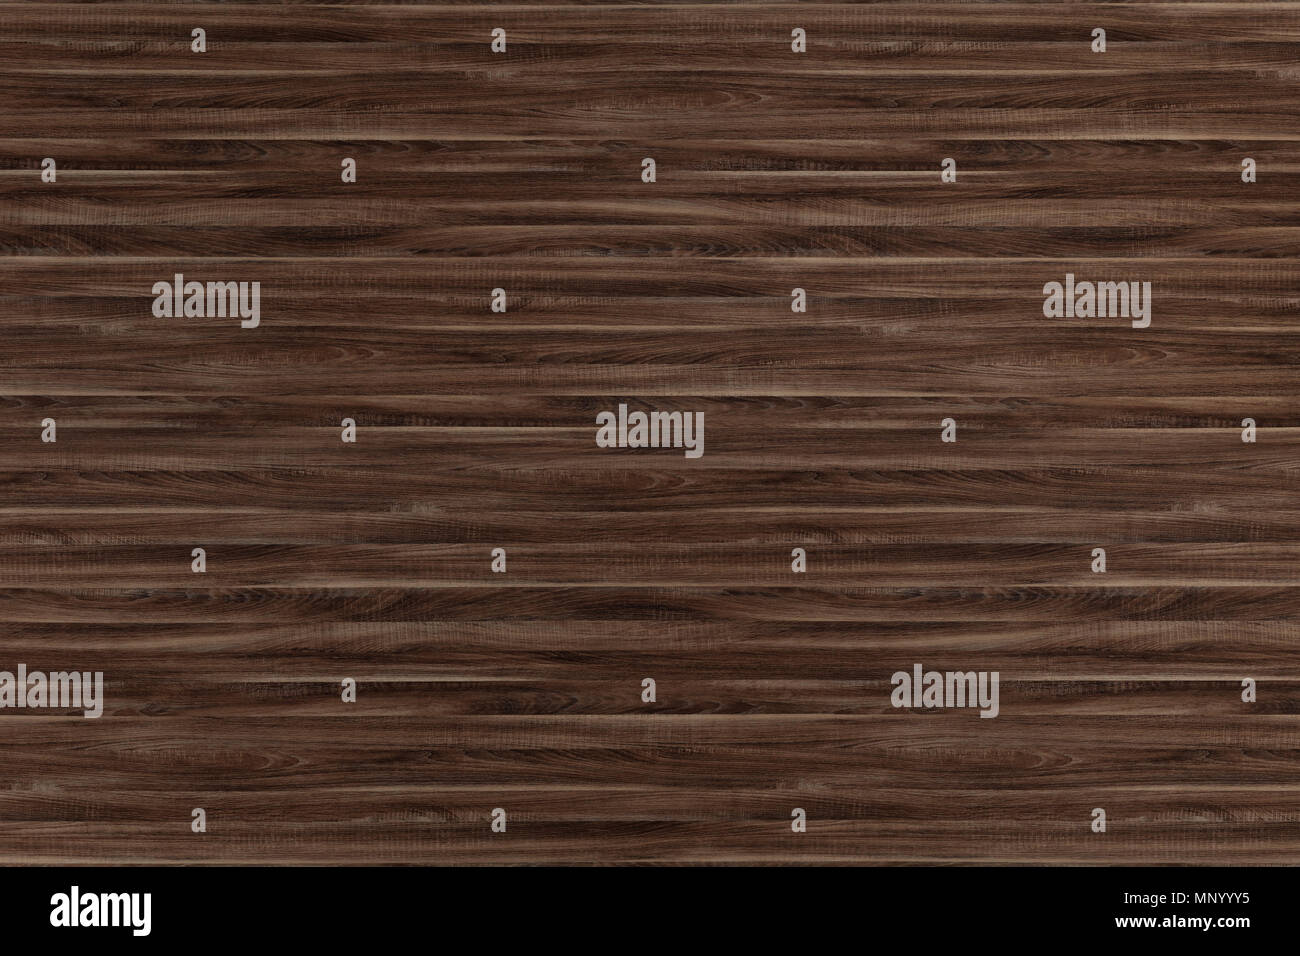 dark wood texture. background old wooden panels Stock Photo